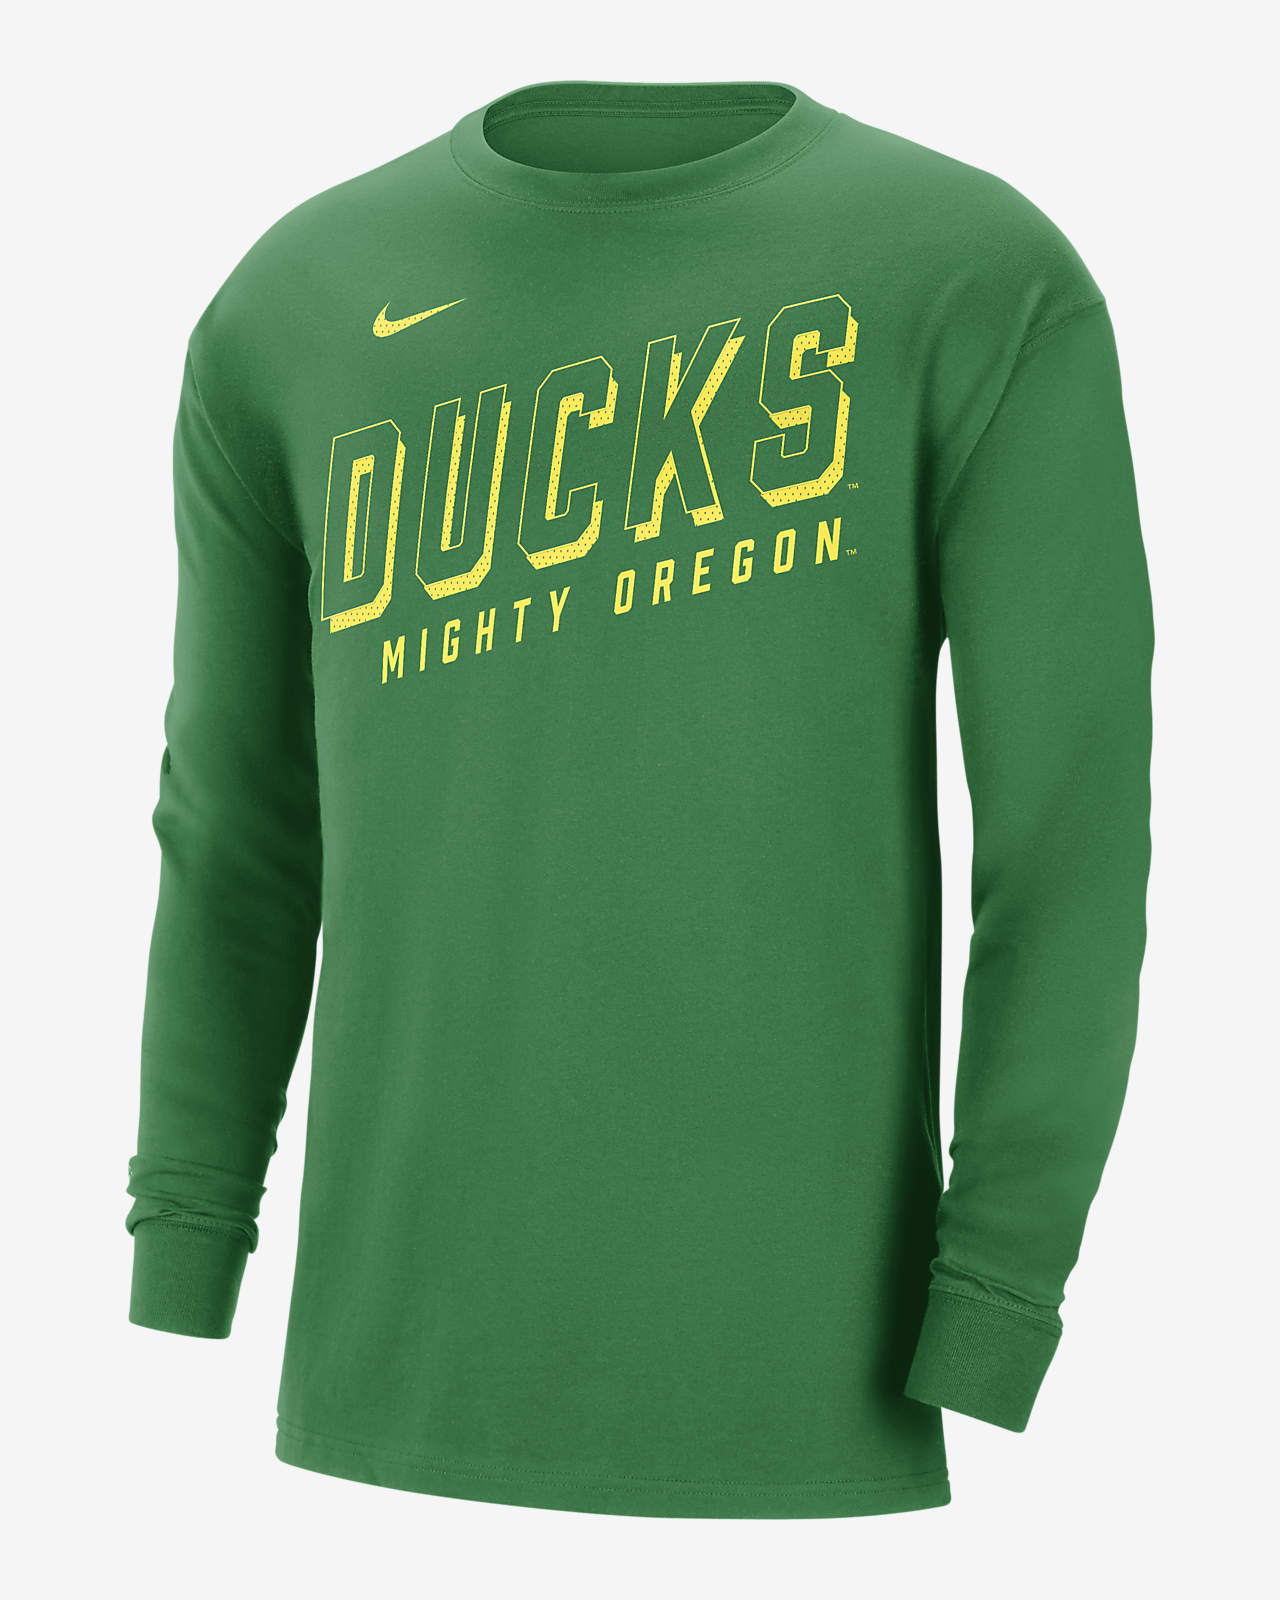 The Mighty Ducks 20' Unisex Baseball T-Shirt